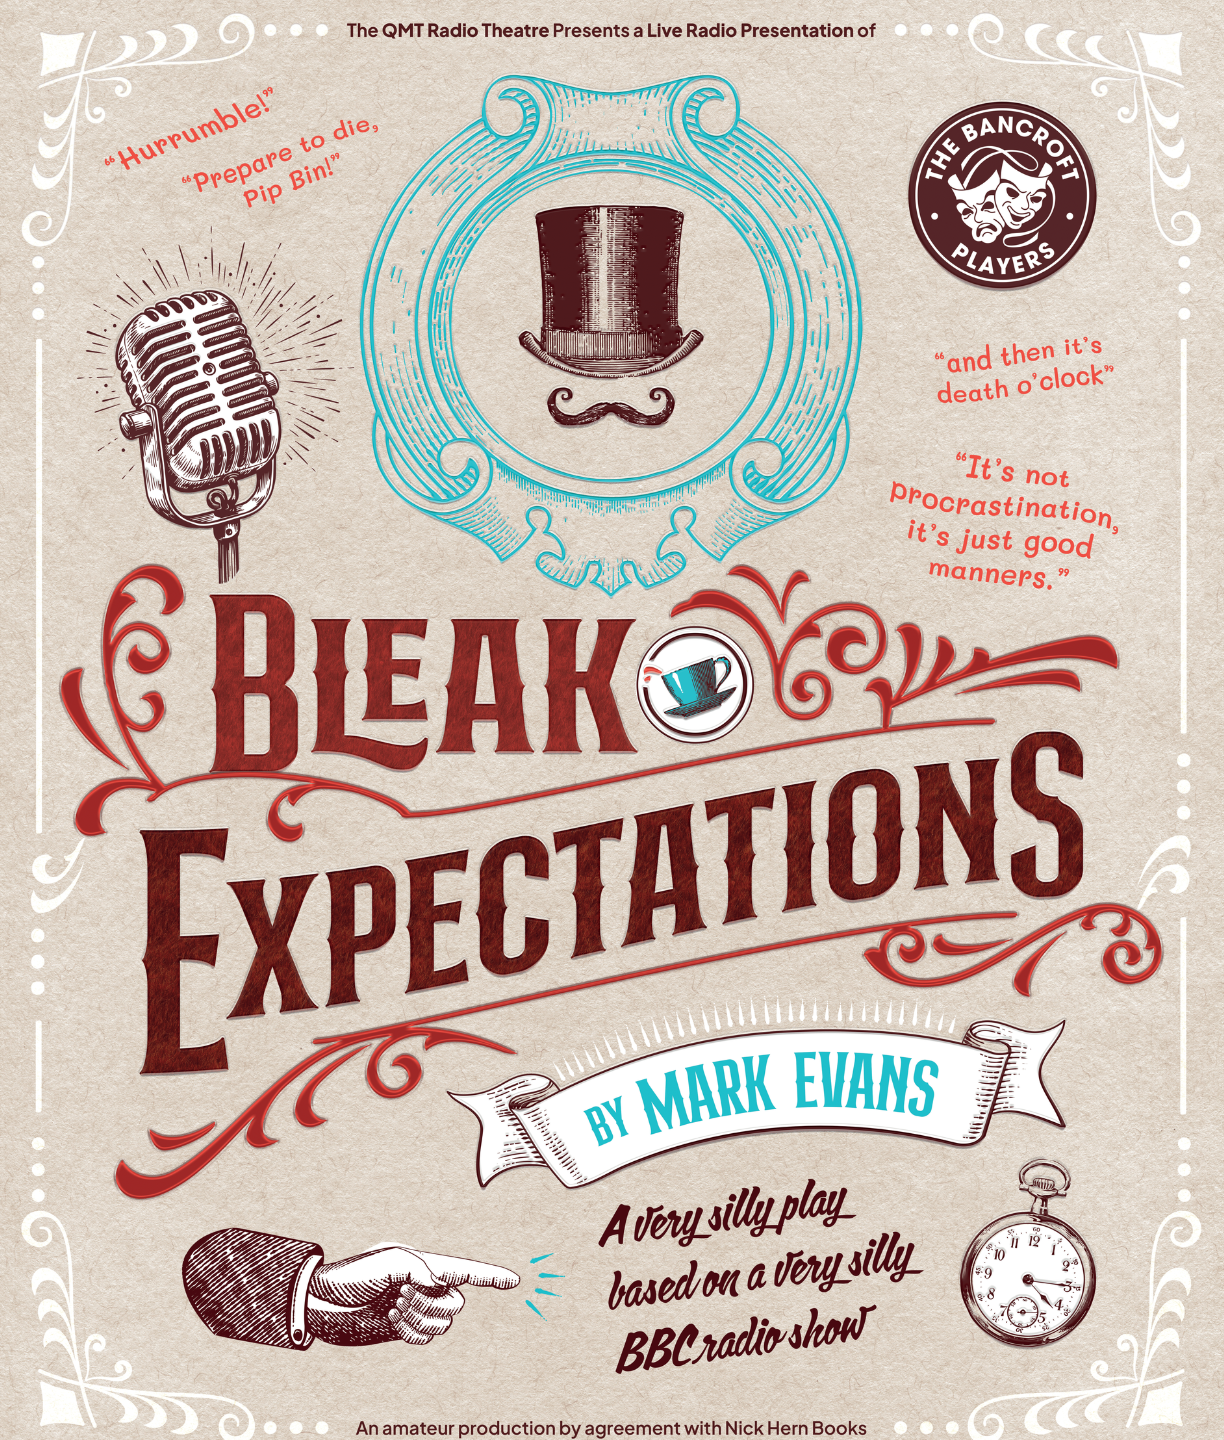 Bleak Expectations Poster Image